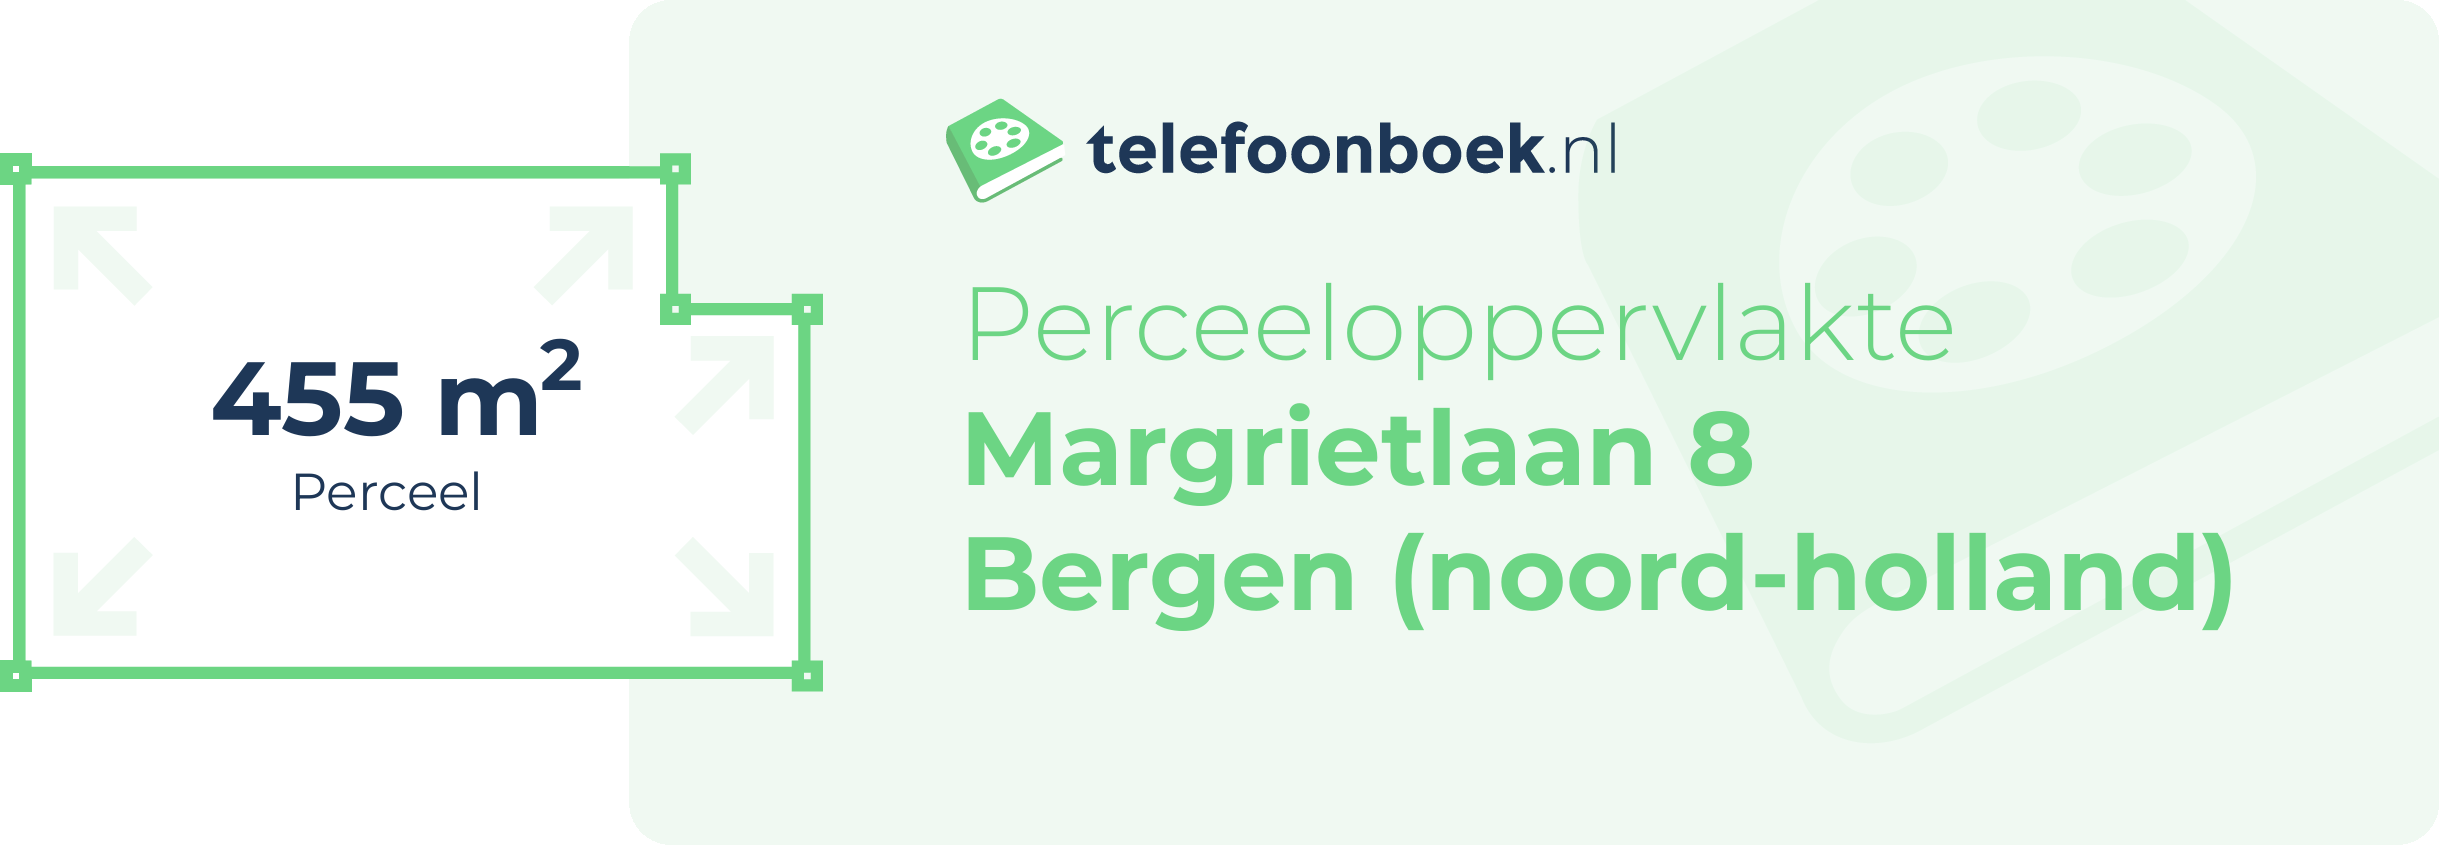 Perceeloppervlakte Margrietlaan 8 Bergen (Noord-Holland)